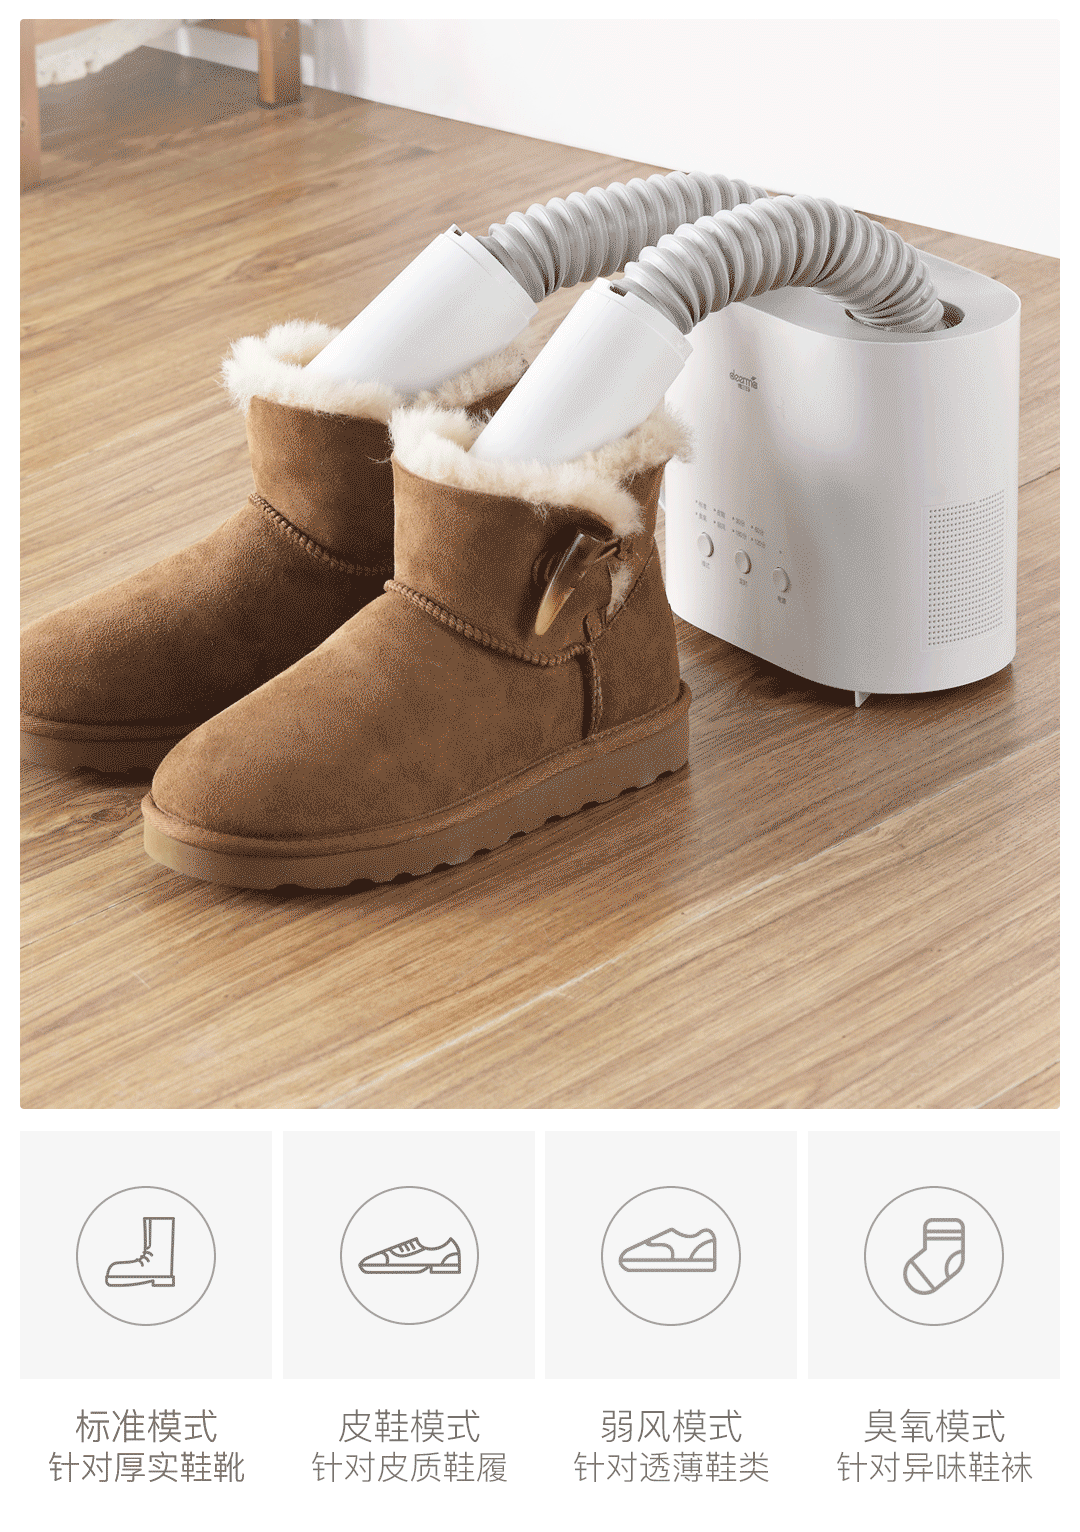 Xiaomi Deerma Shoes Dryer DEM-HX20 Sterilization Intelligent Electric Shoes Drier Heater Deodorization Drying Machine - White